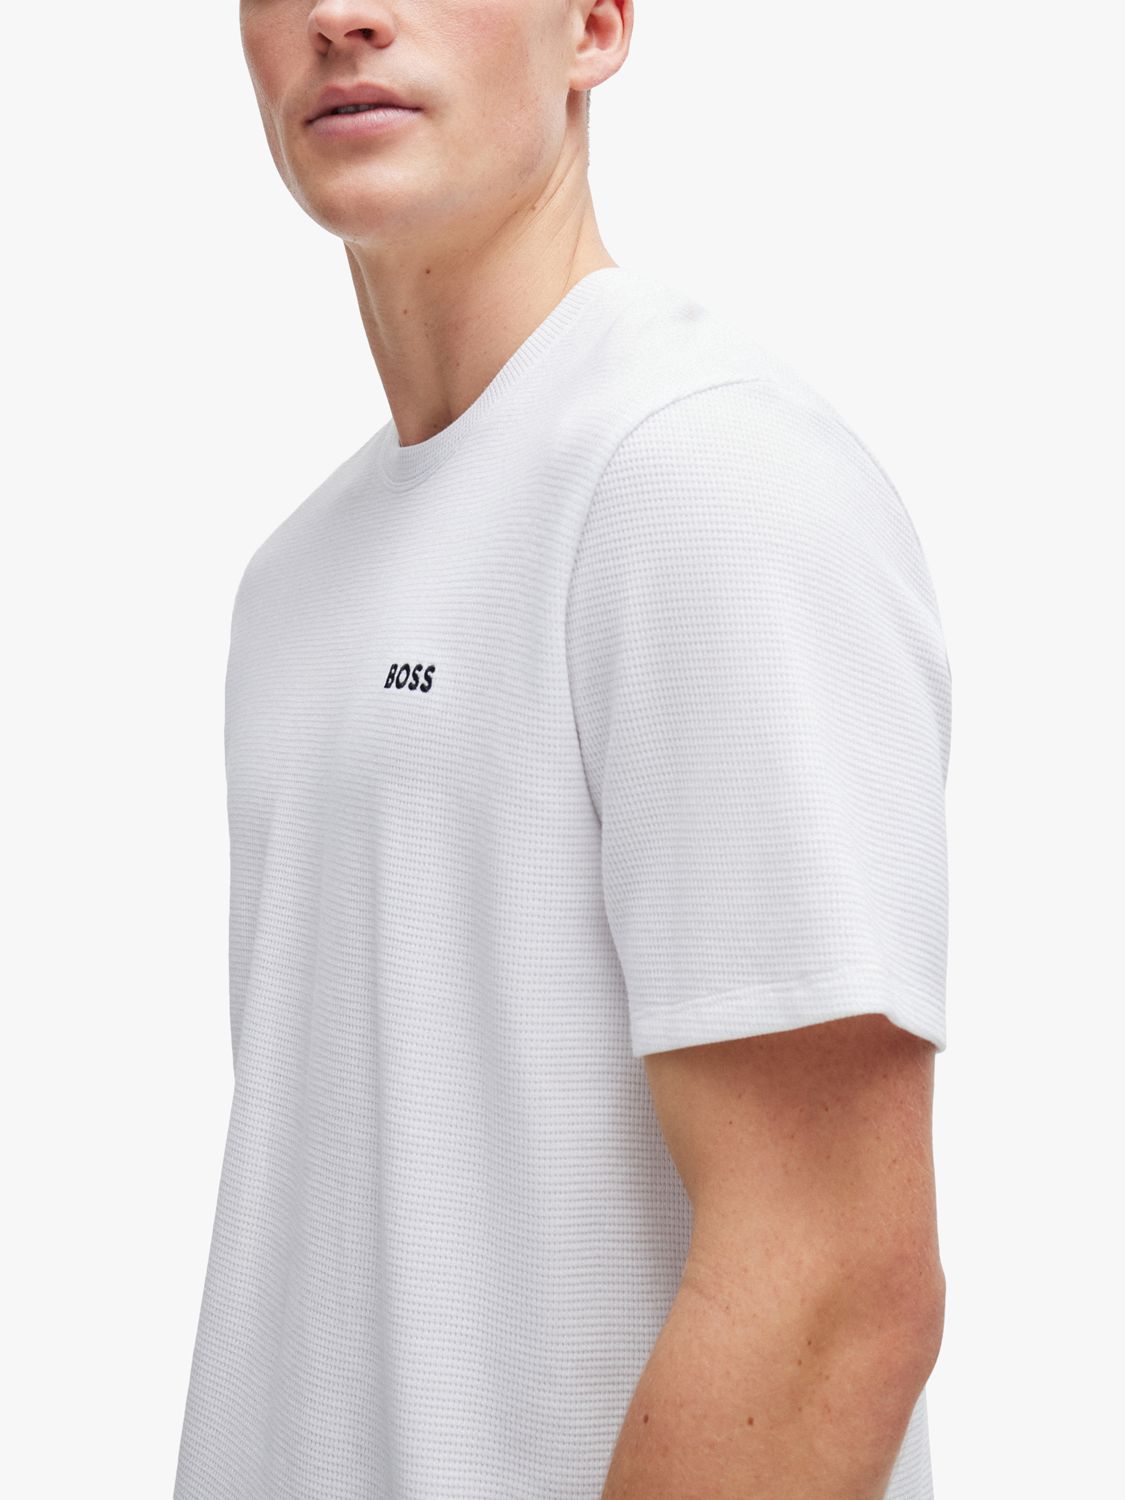 BOSS Waffle Short Sleeve T-Shirt, Open White, L